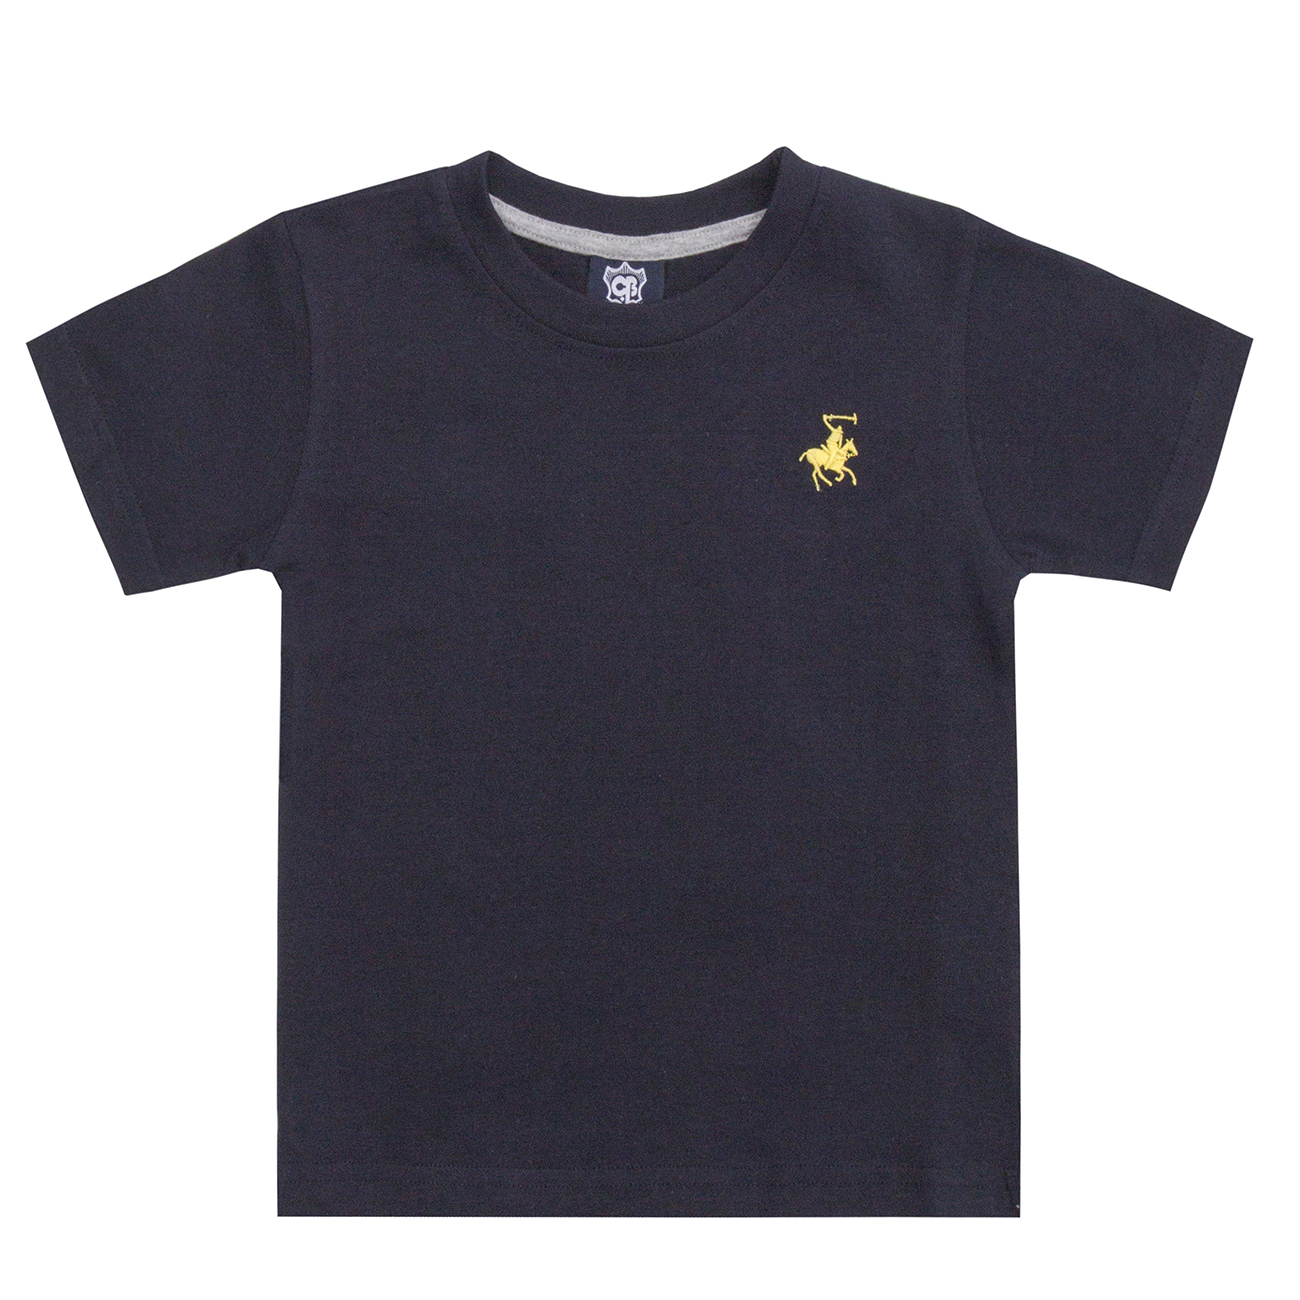 Boys Cotton Crew Neck T Shirt Top Kids TShirt Top Embroidered Horse Emblem Size 